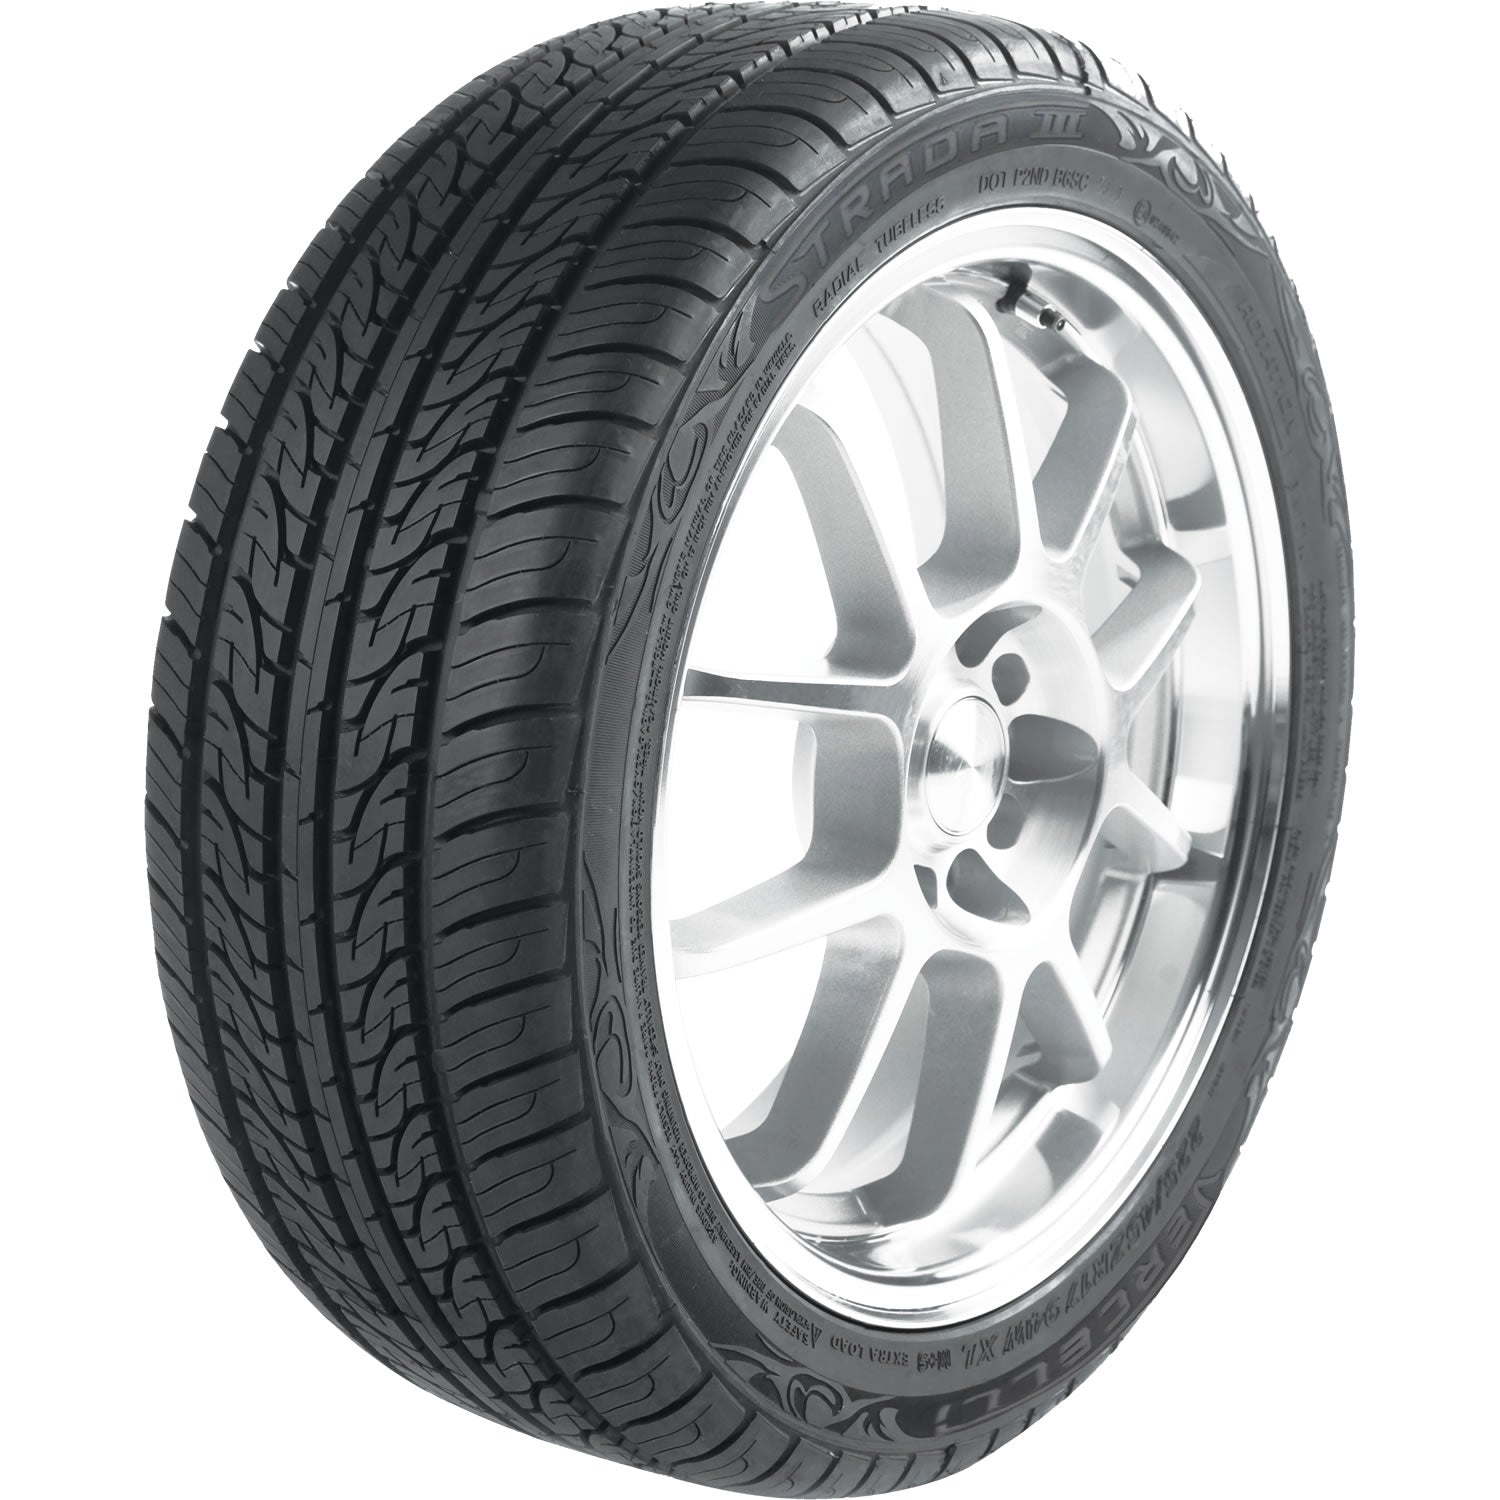 VERCELLI STRADA II 205/50ZR17 (25.1X8.4R 17) Tires